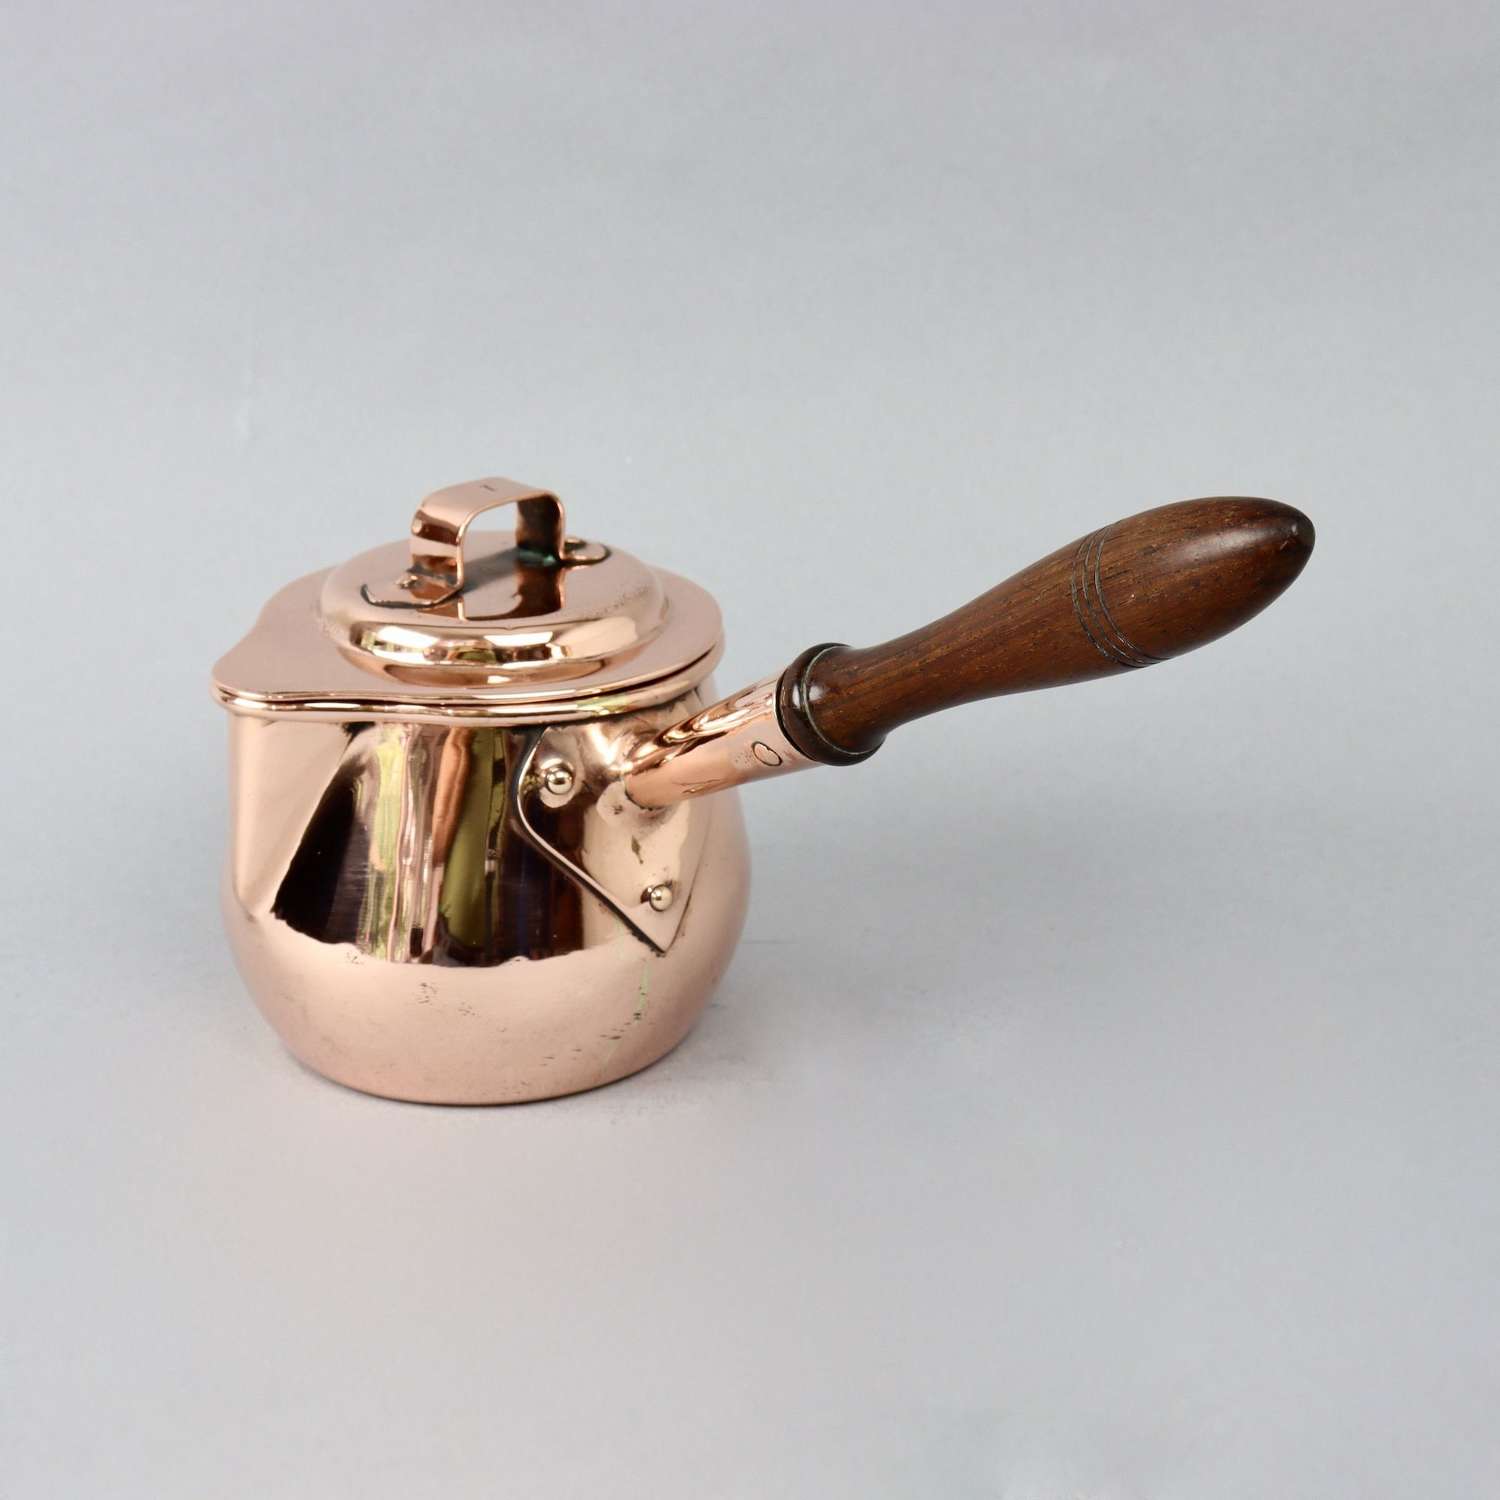 Benham's Copper Saucepan with Rosewood Handle